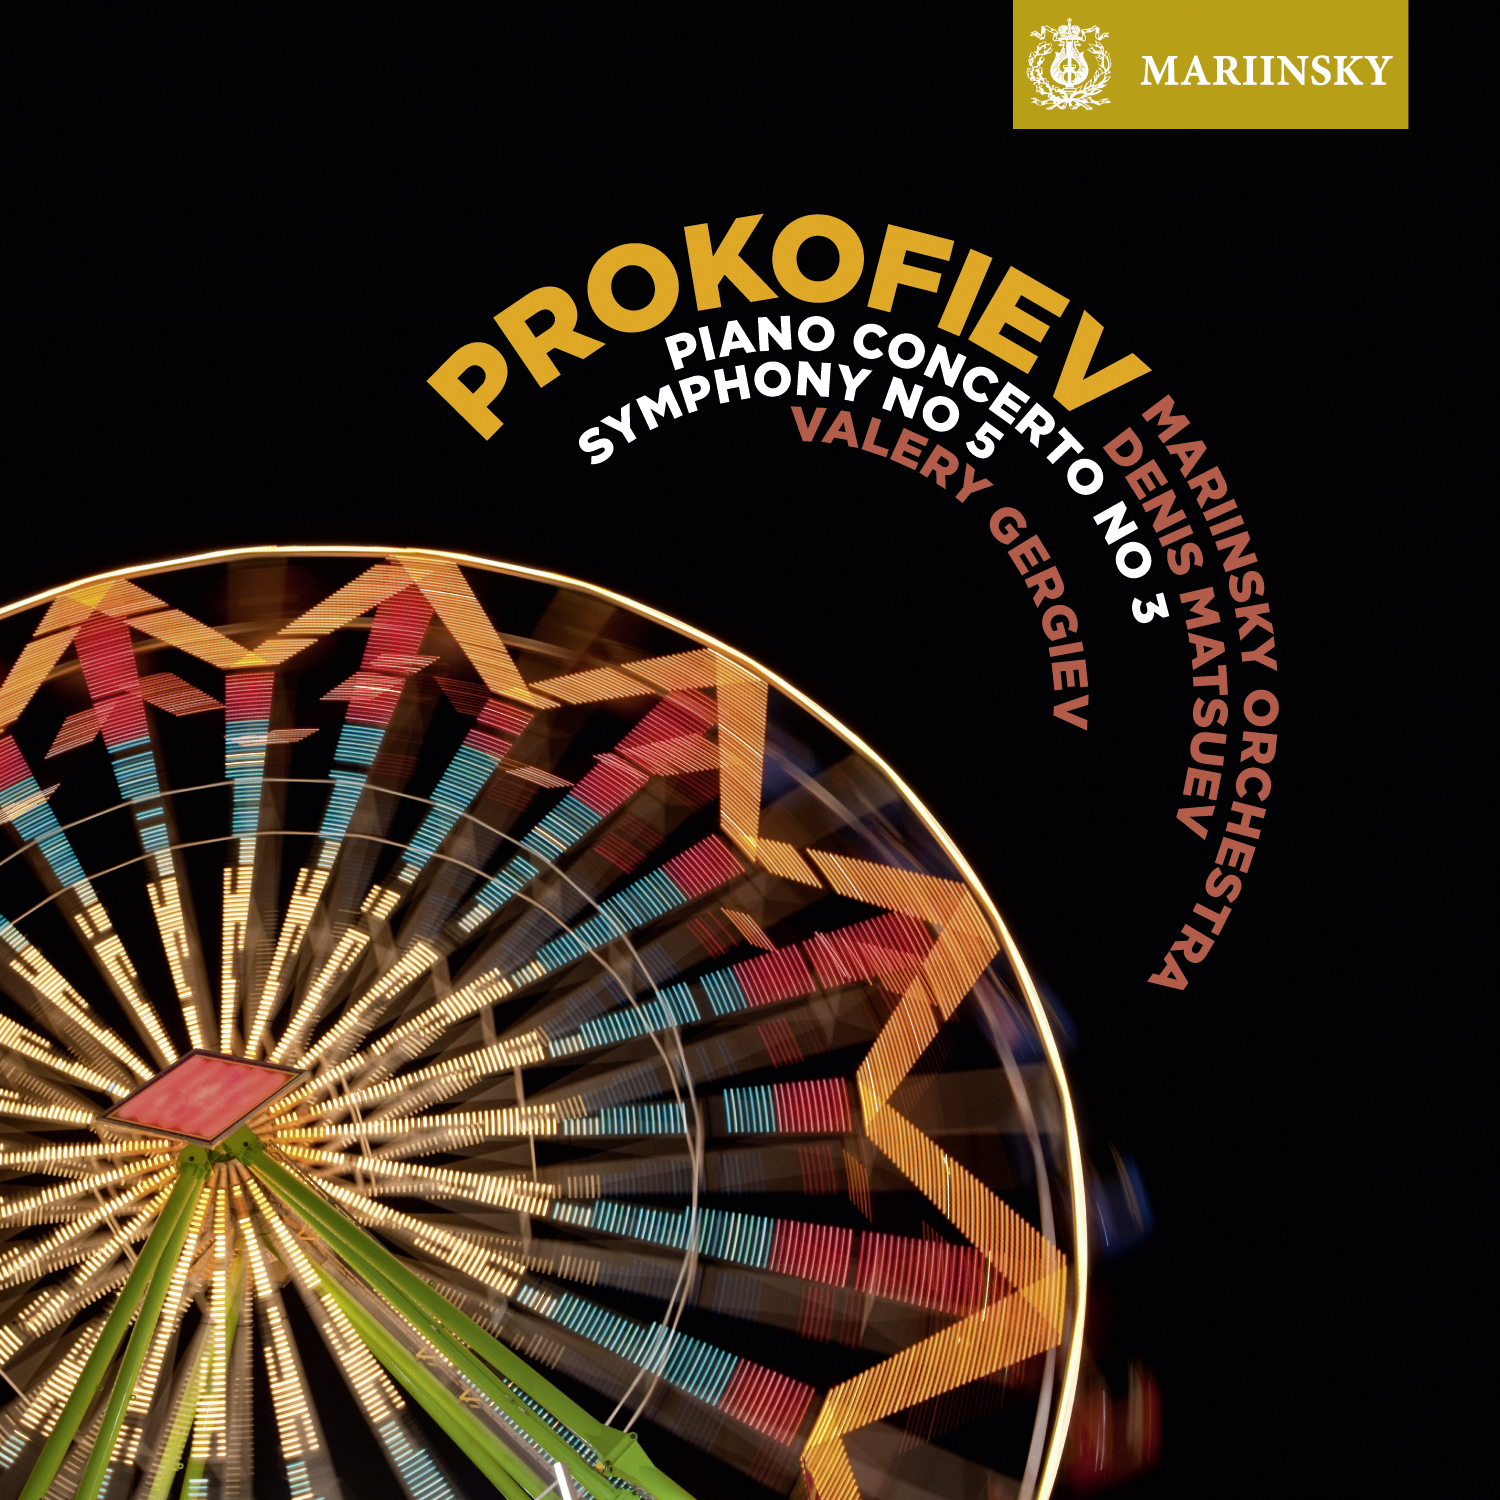 Denis Matsuev, Mariinsky Orchestra, Valery Gergiev - Prokofiev: Piano Concerto No 3 & Symphony No 5 (2014) MCH SACD ISO + DSF DSD64 + FLAC 24bit/96kHz